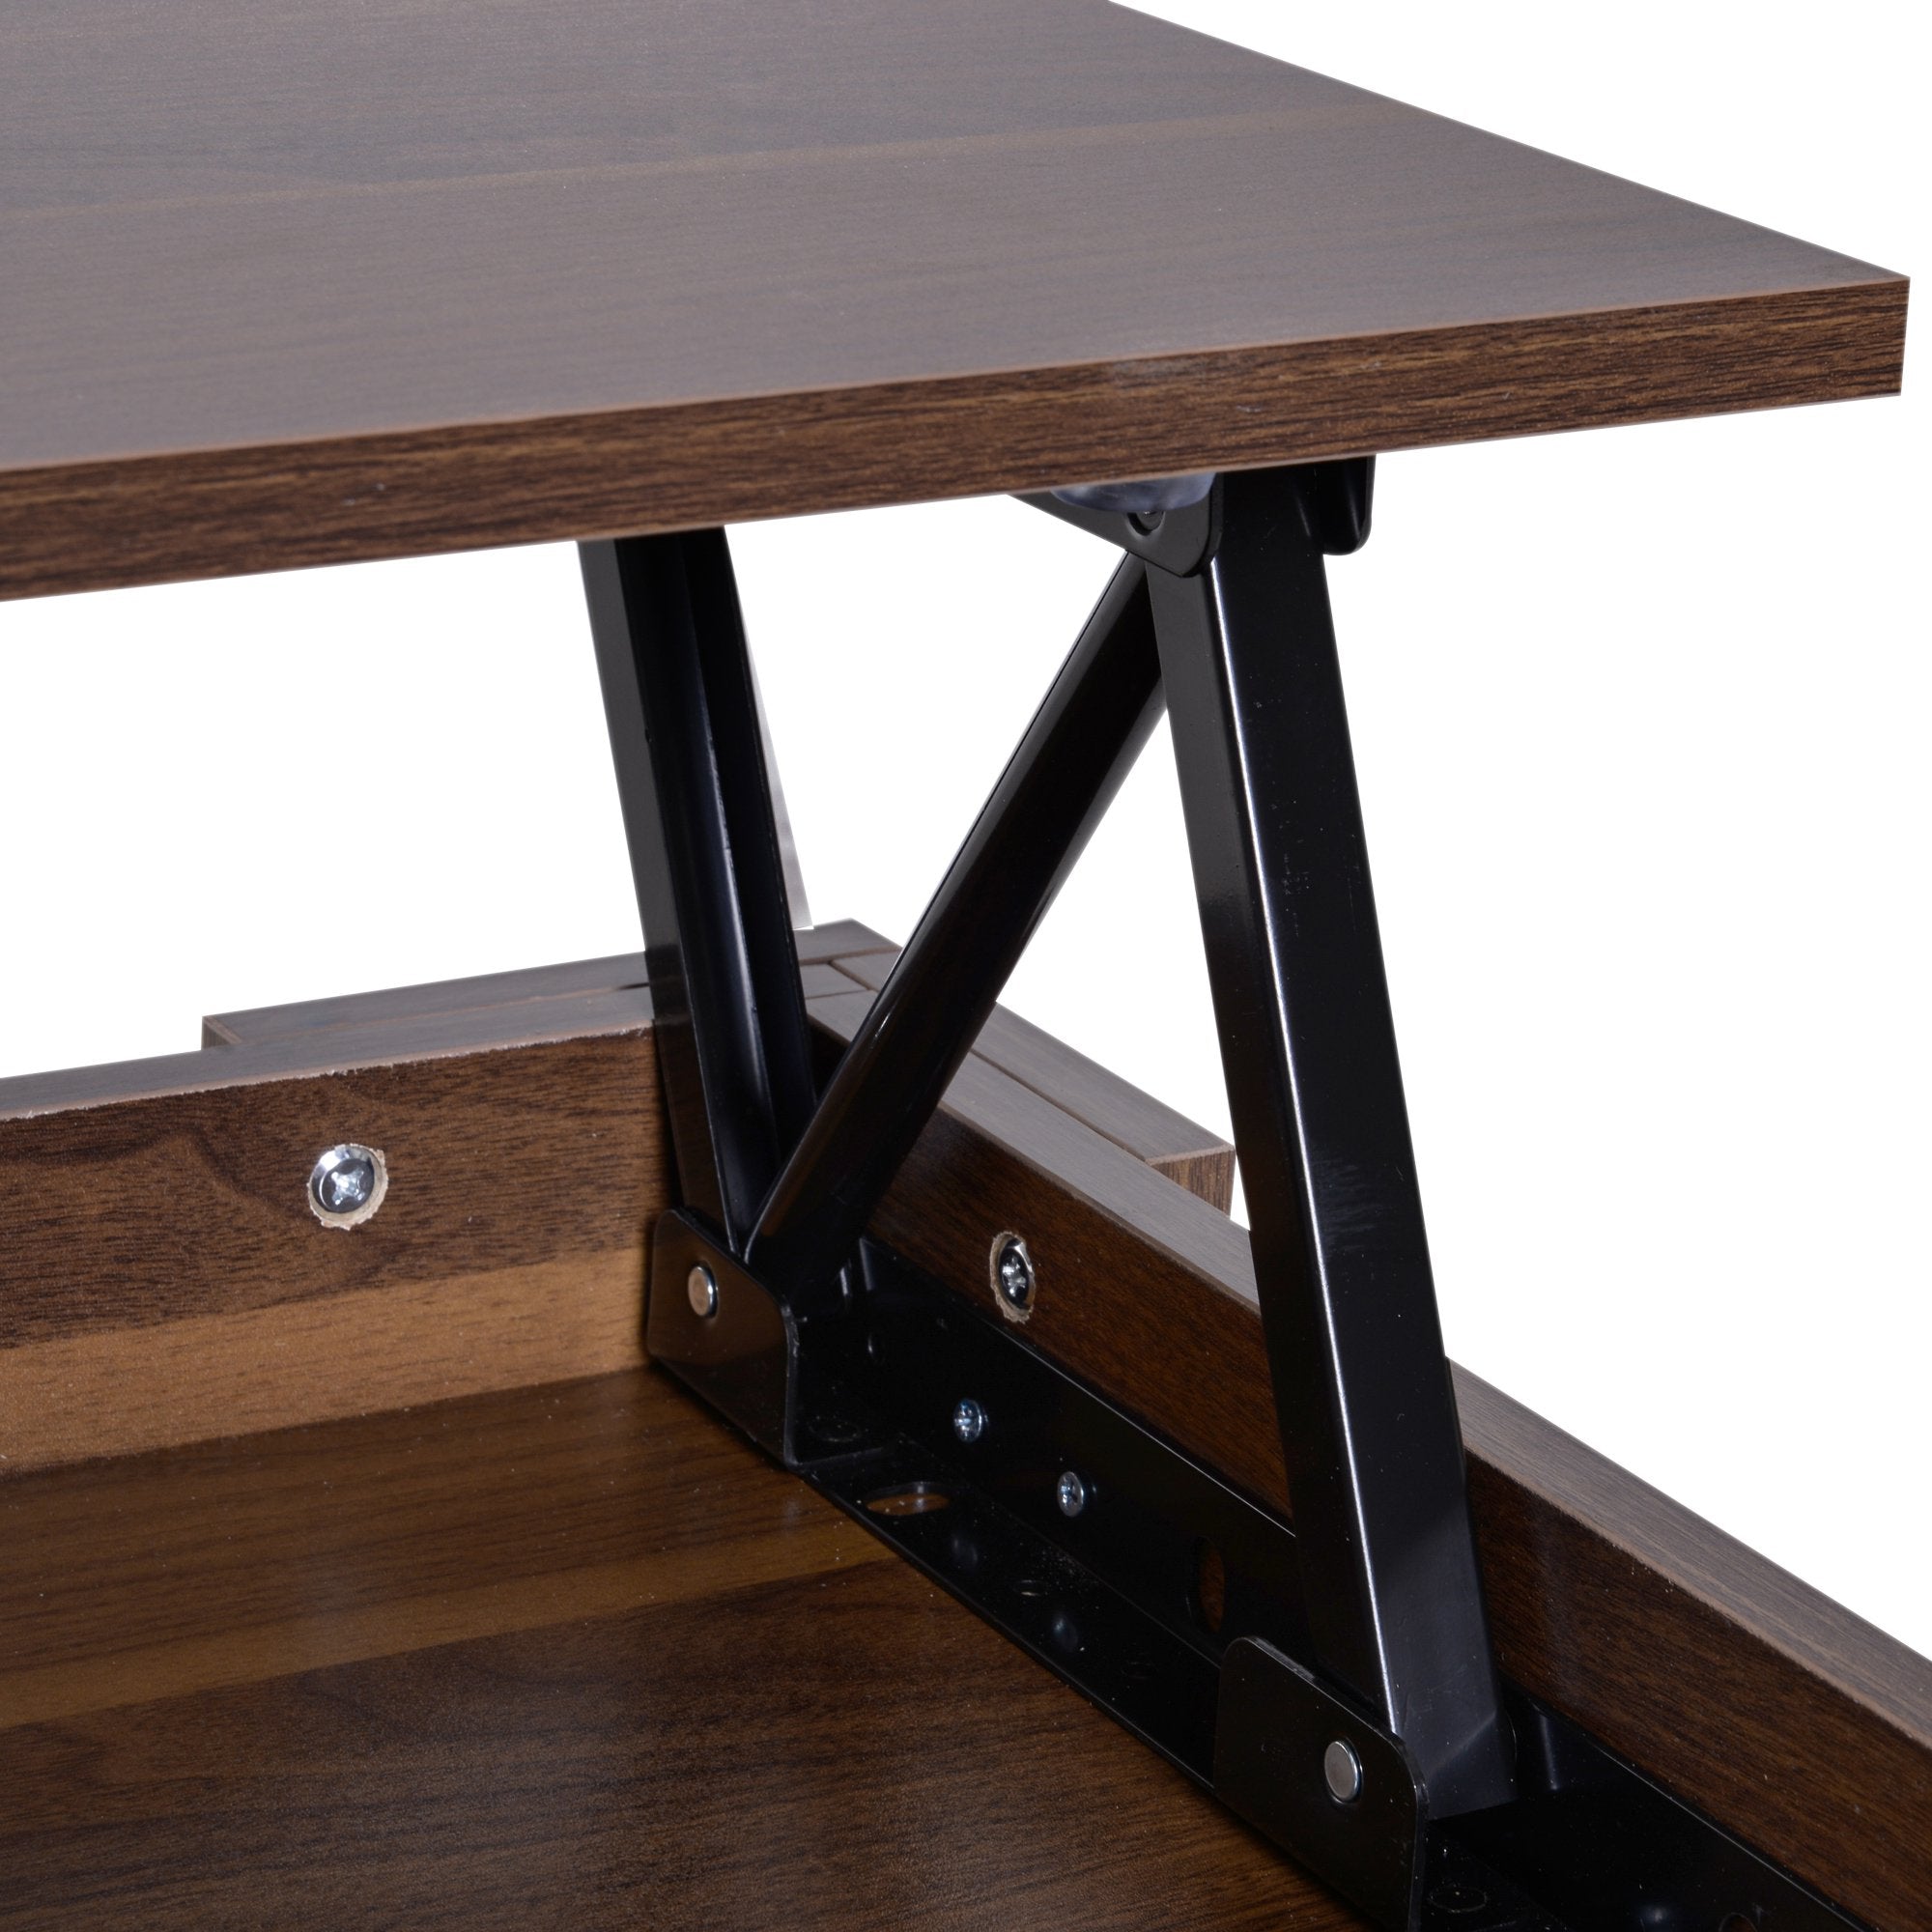 Modern Lift Up Top Coffee Table, 100W X 50D 50/63Hcm Cm - Natural Wood Grain Colour